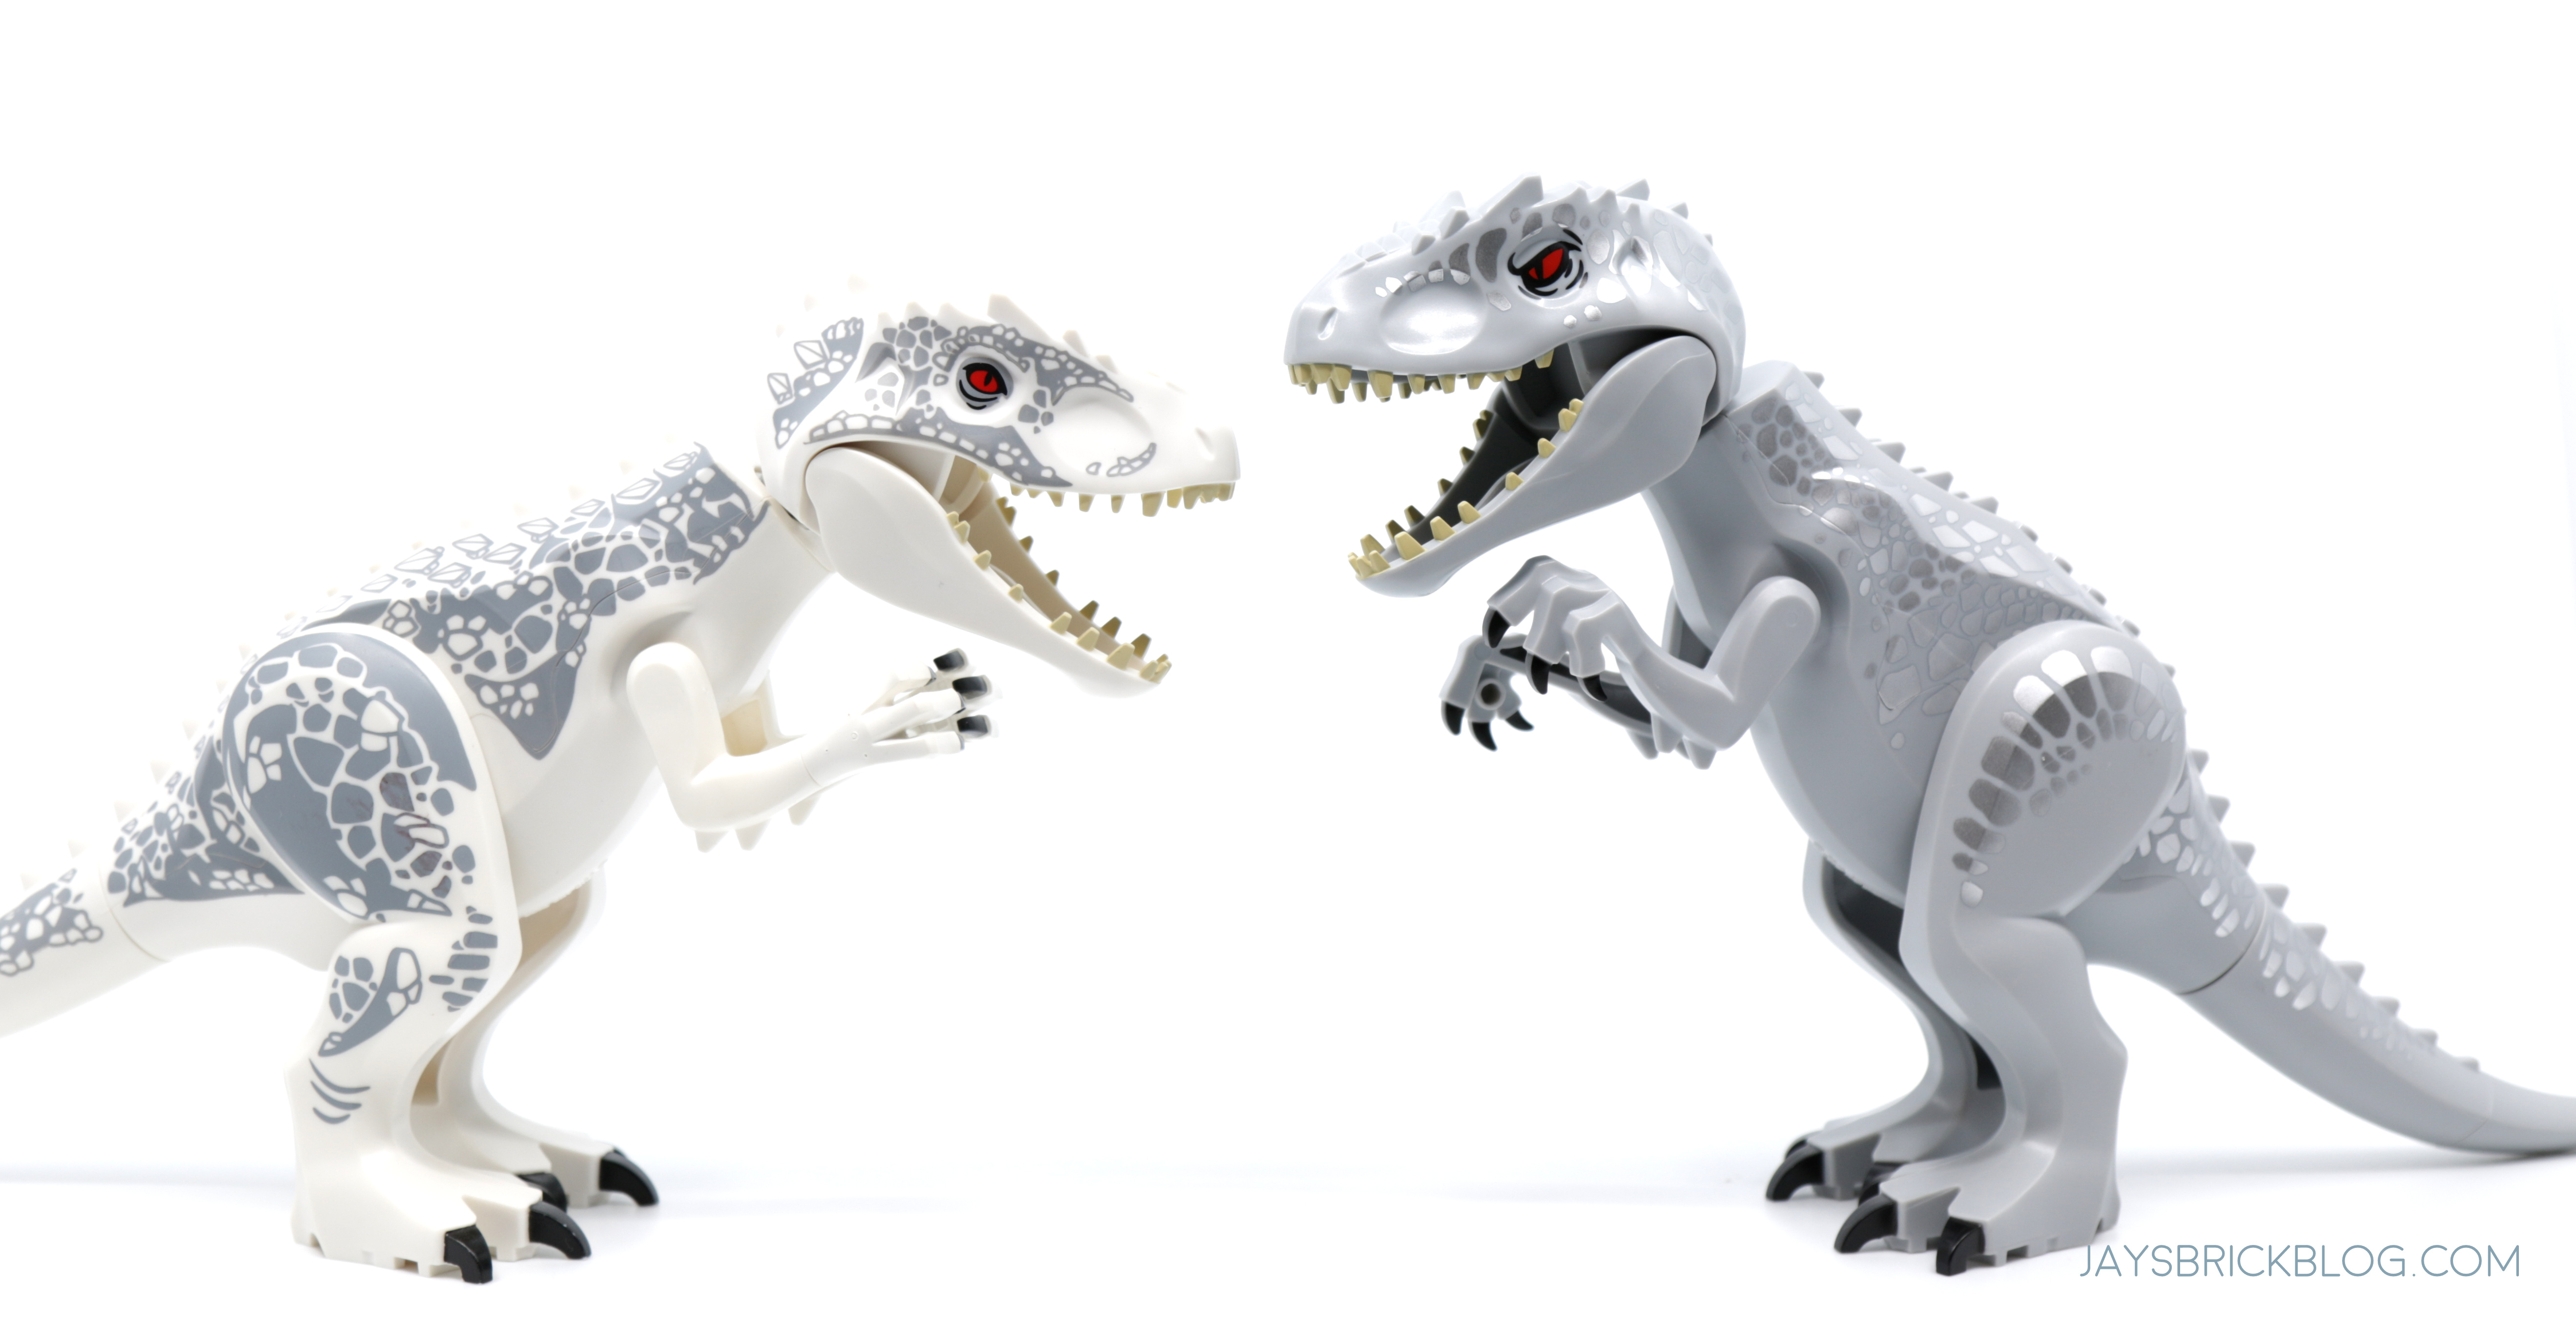 Indominus Rex XXL Jurassic Large Dinosaur 7x11" Figure Blocks Fit Lego Toys 